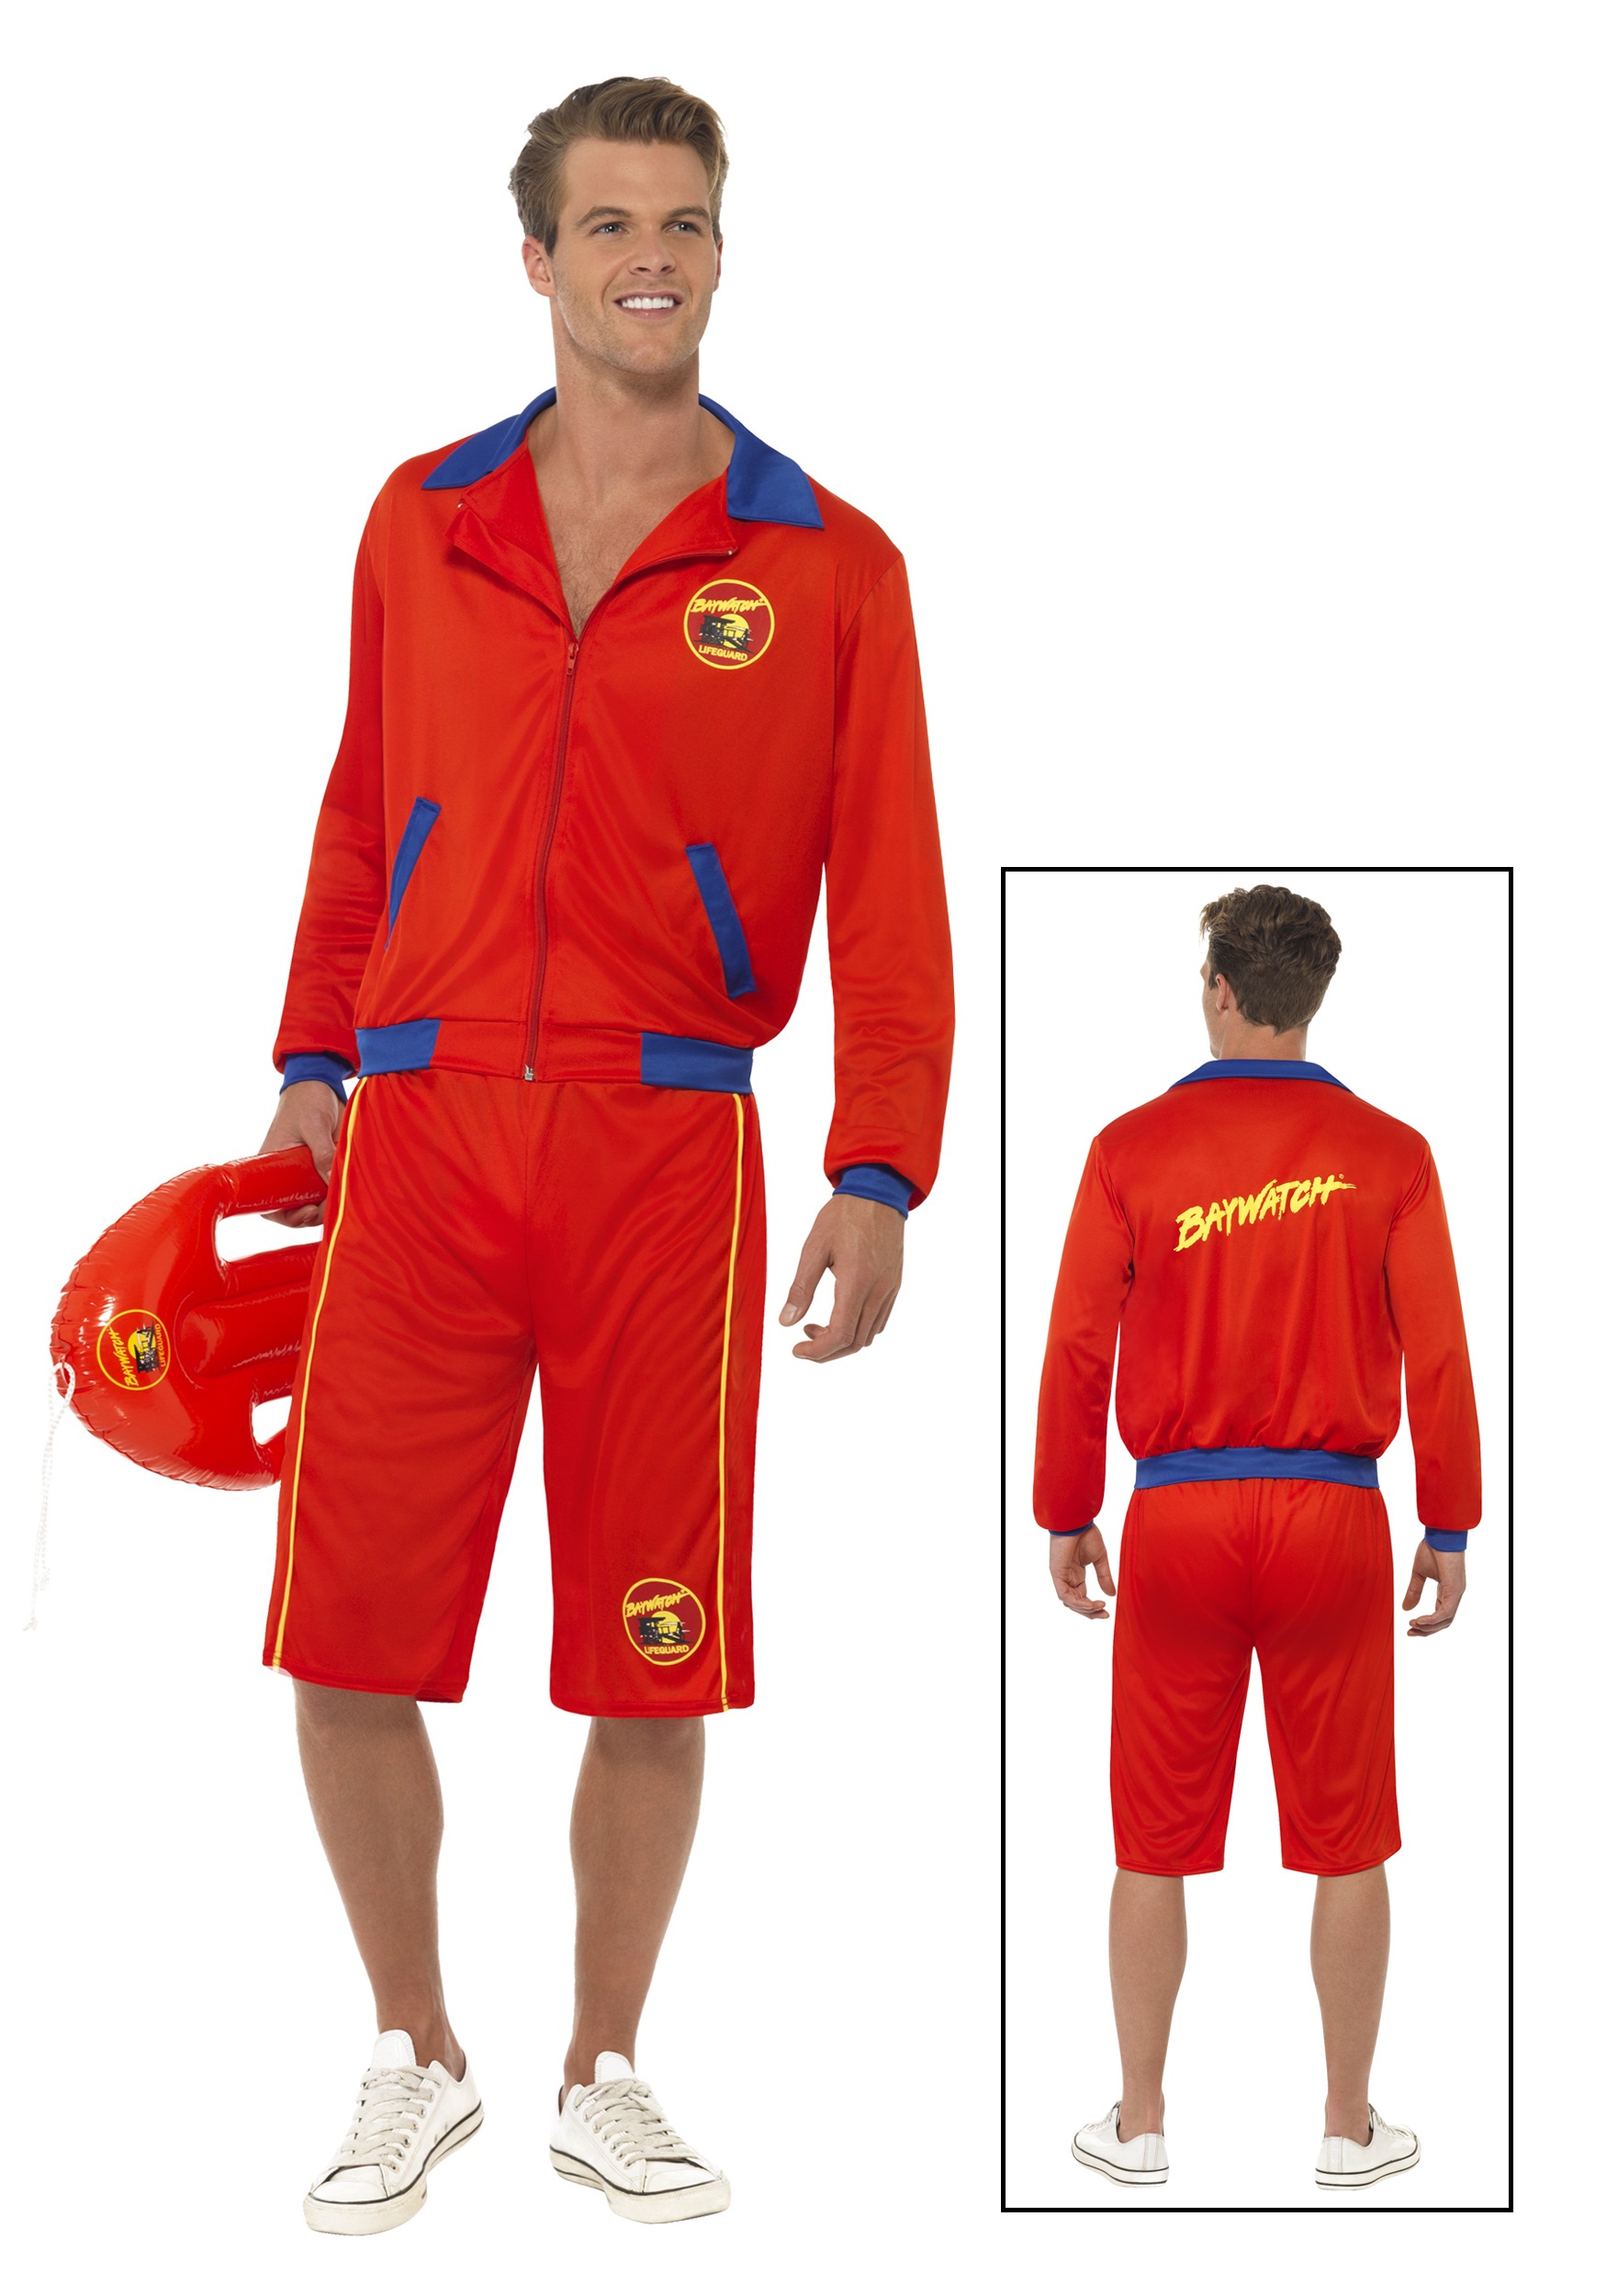 Baywatch Beach Lifeguard Costume for Men